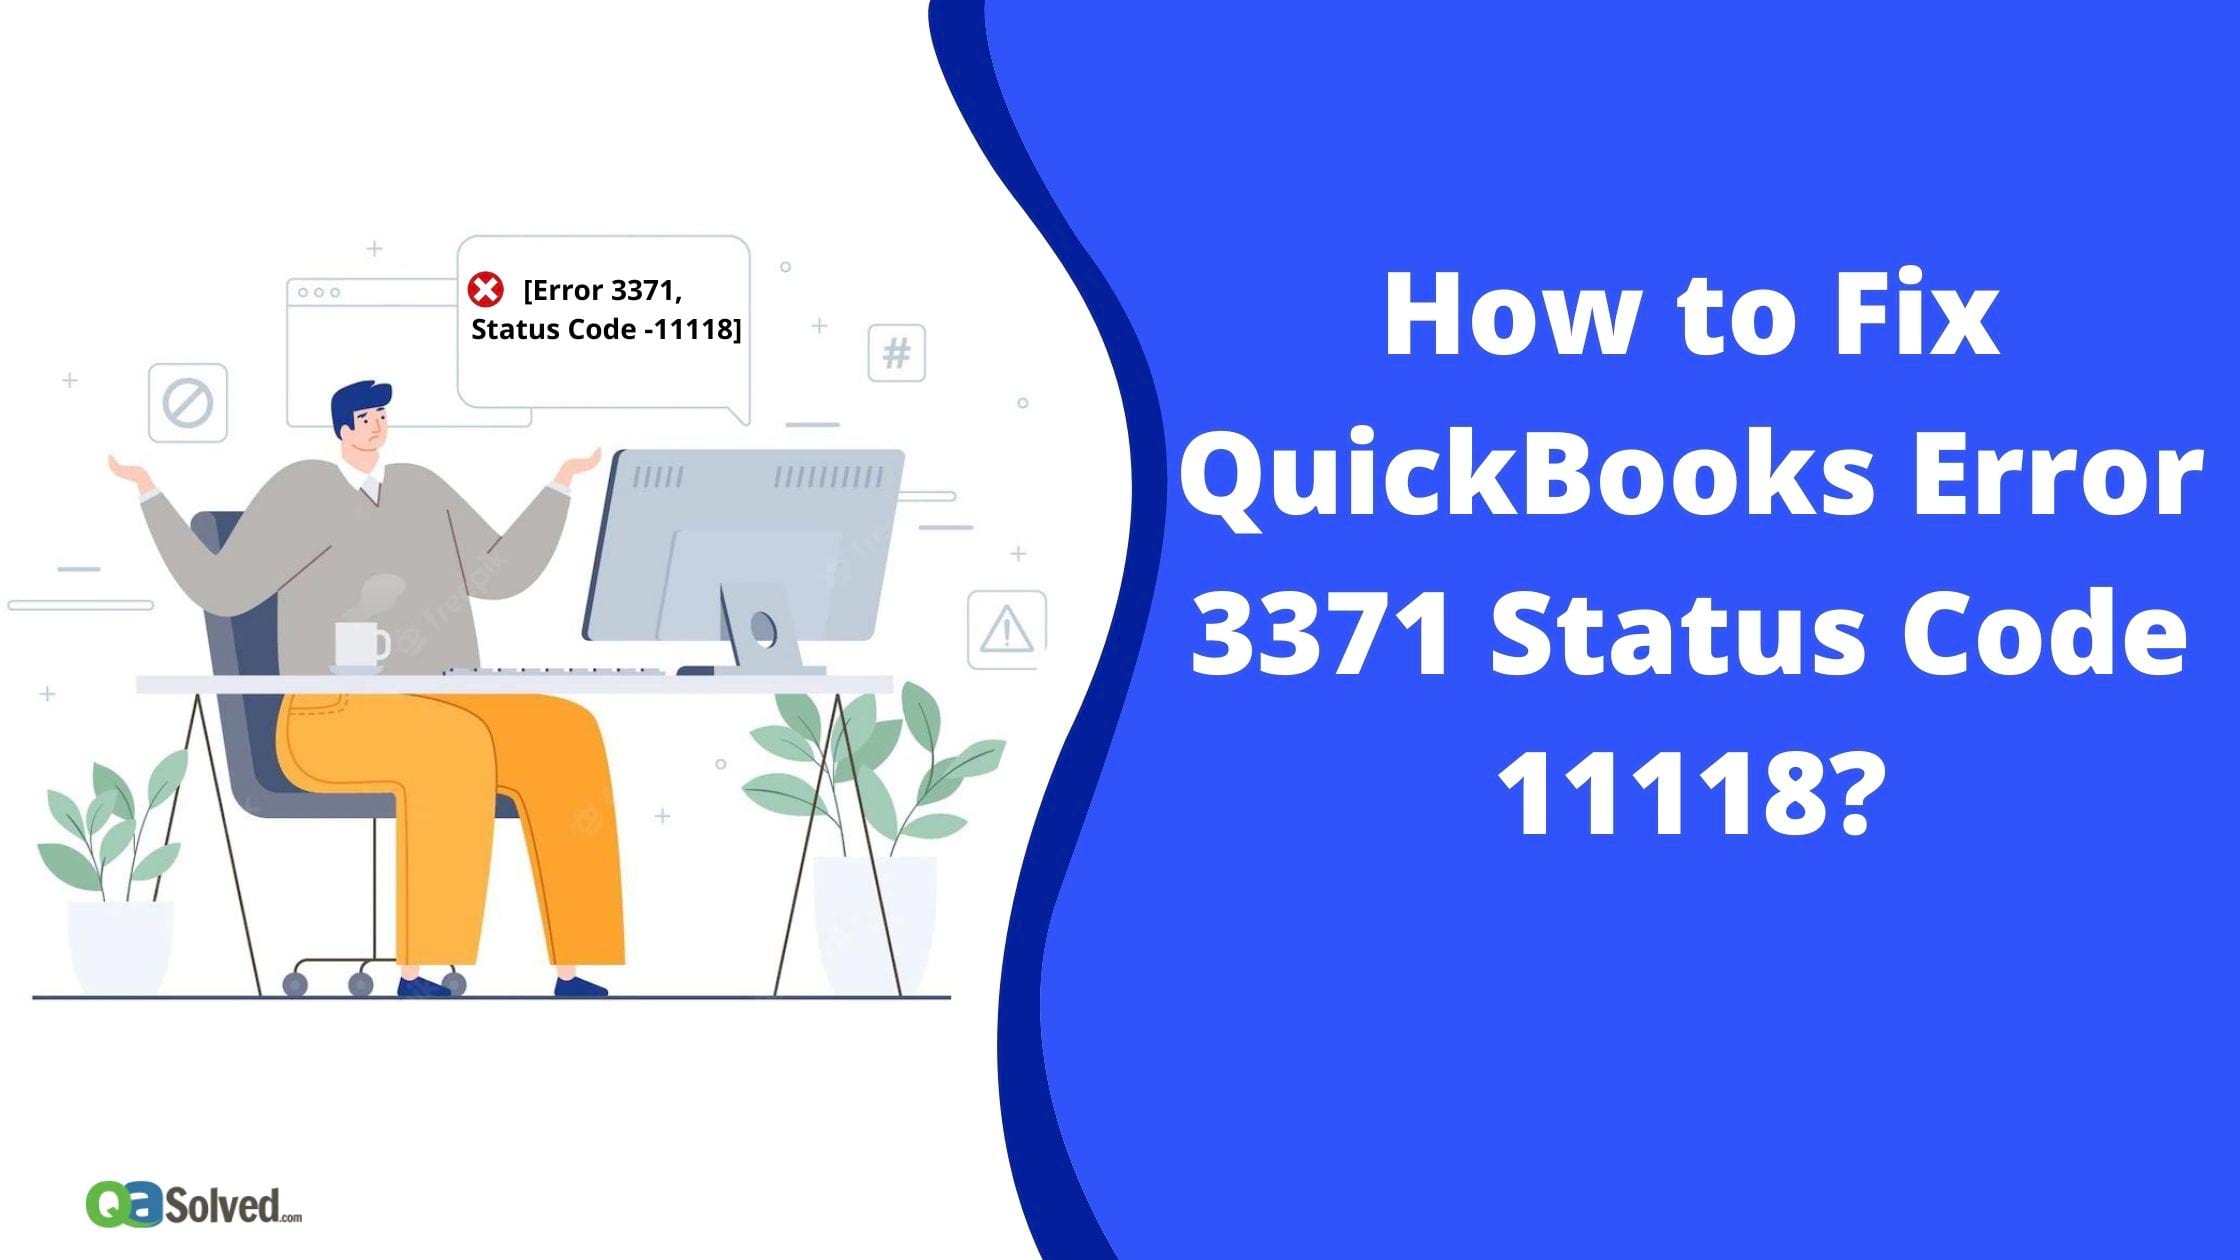 Quickbooks Error 3371 Status Code 11118 and How to Resolve